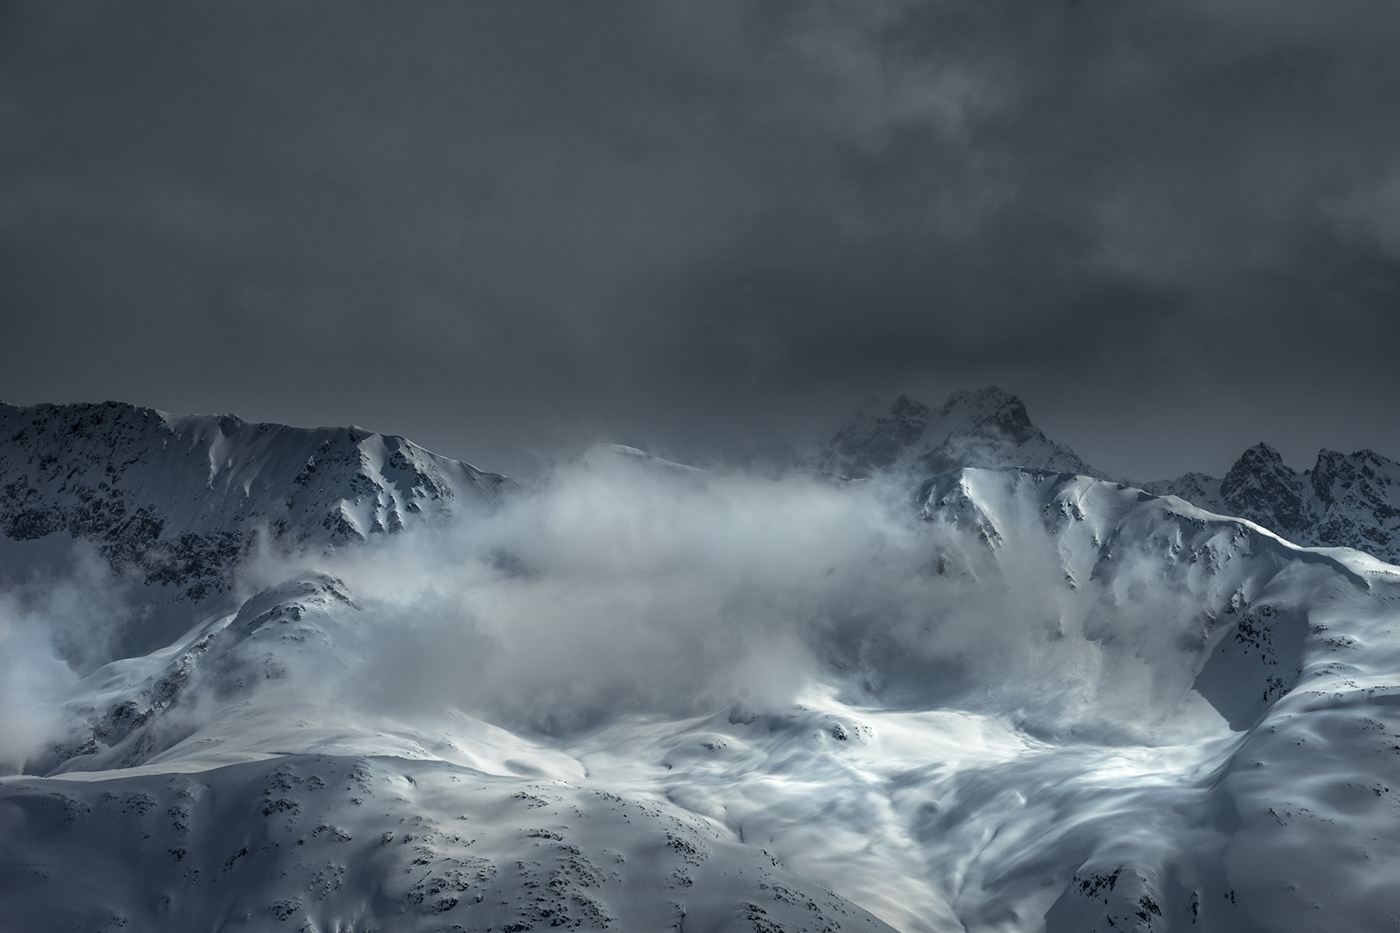 Landscape alps Outdoor mountains wanderlust Switzerland skiing cabin touring winter